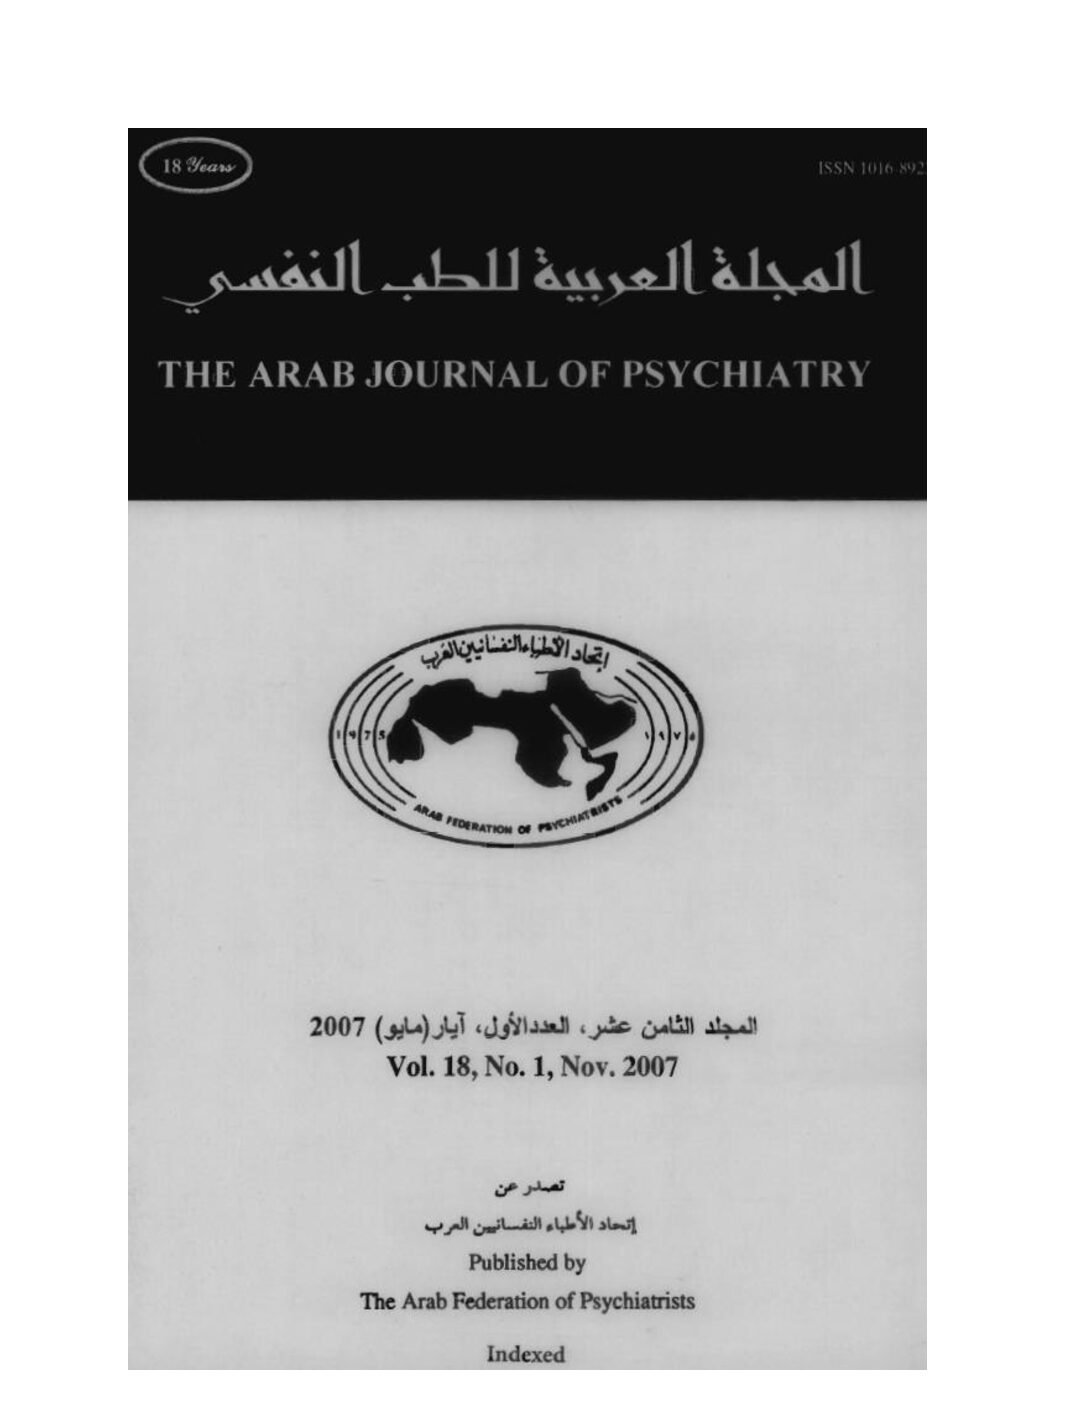 The Arab Journal of Psychiatry (2007) Vol, 18, No.1